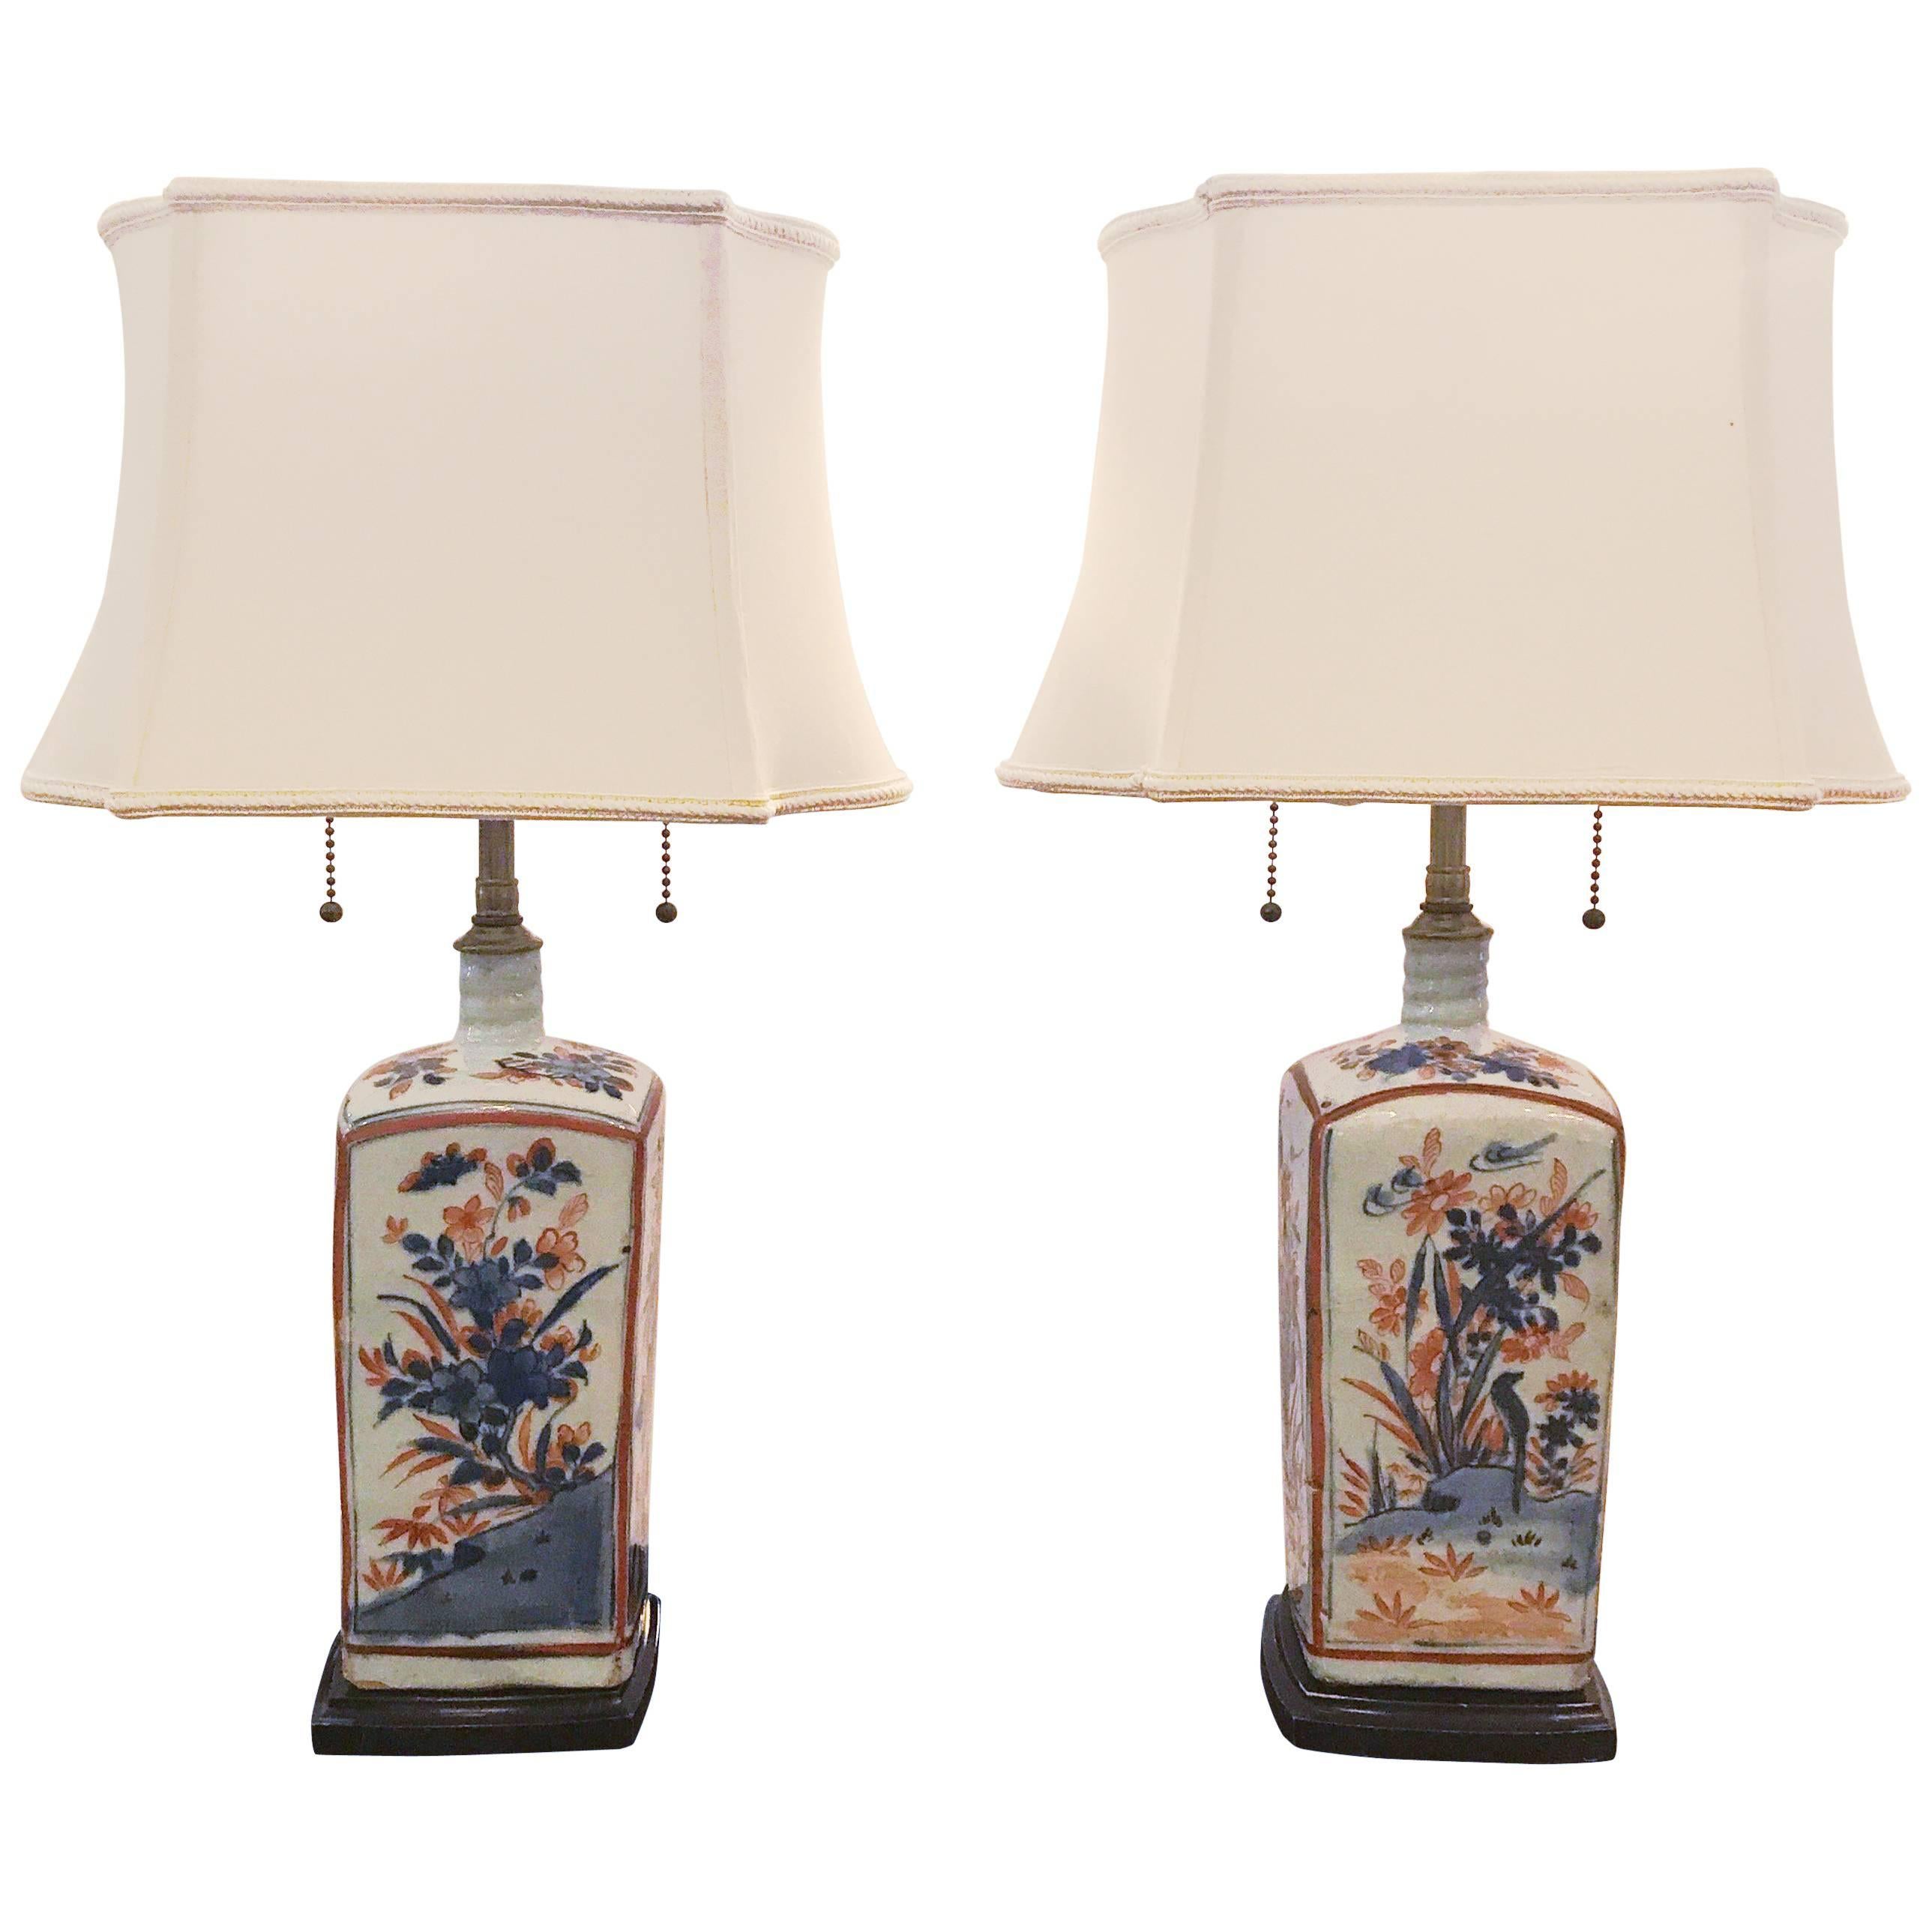 Pair of Imari Porcelain Lamps 18th Century